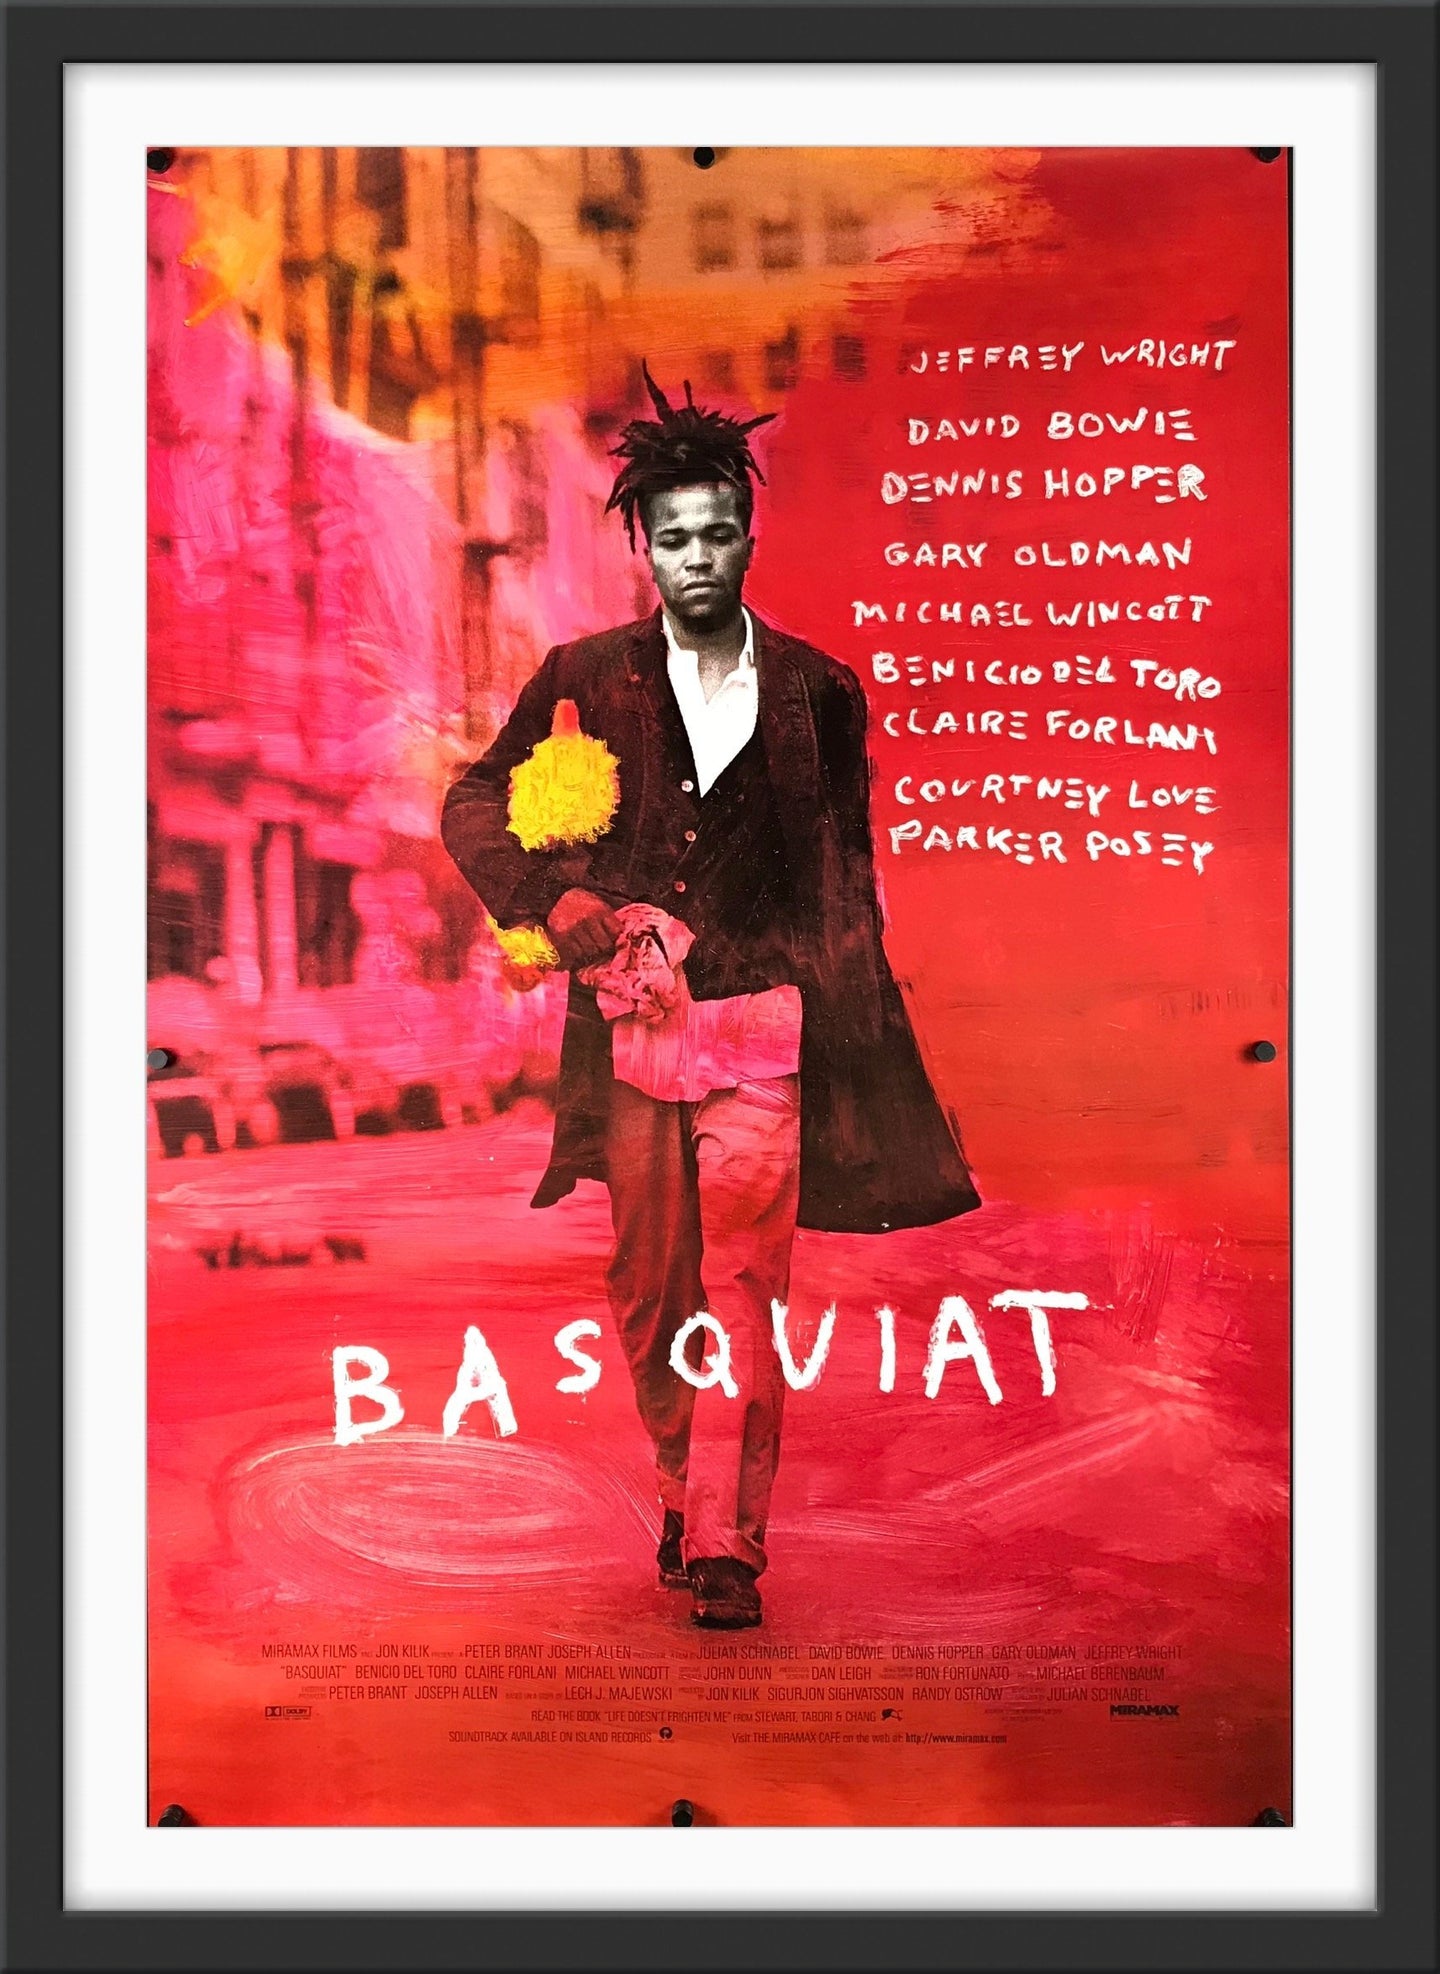 An original movie poster for the film Basquiat